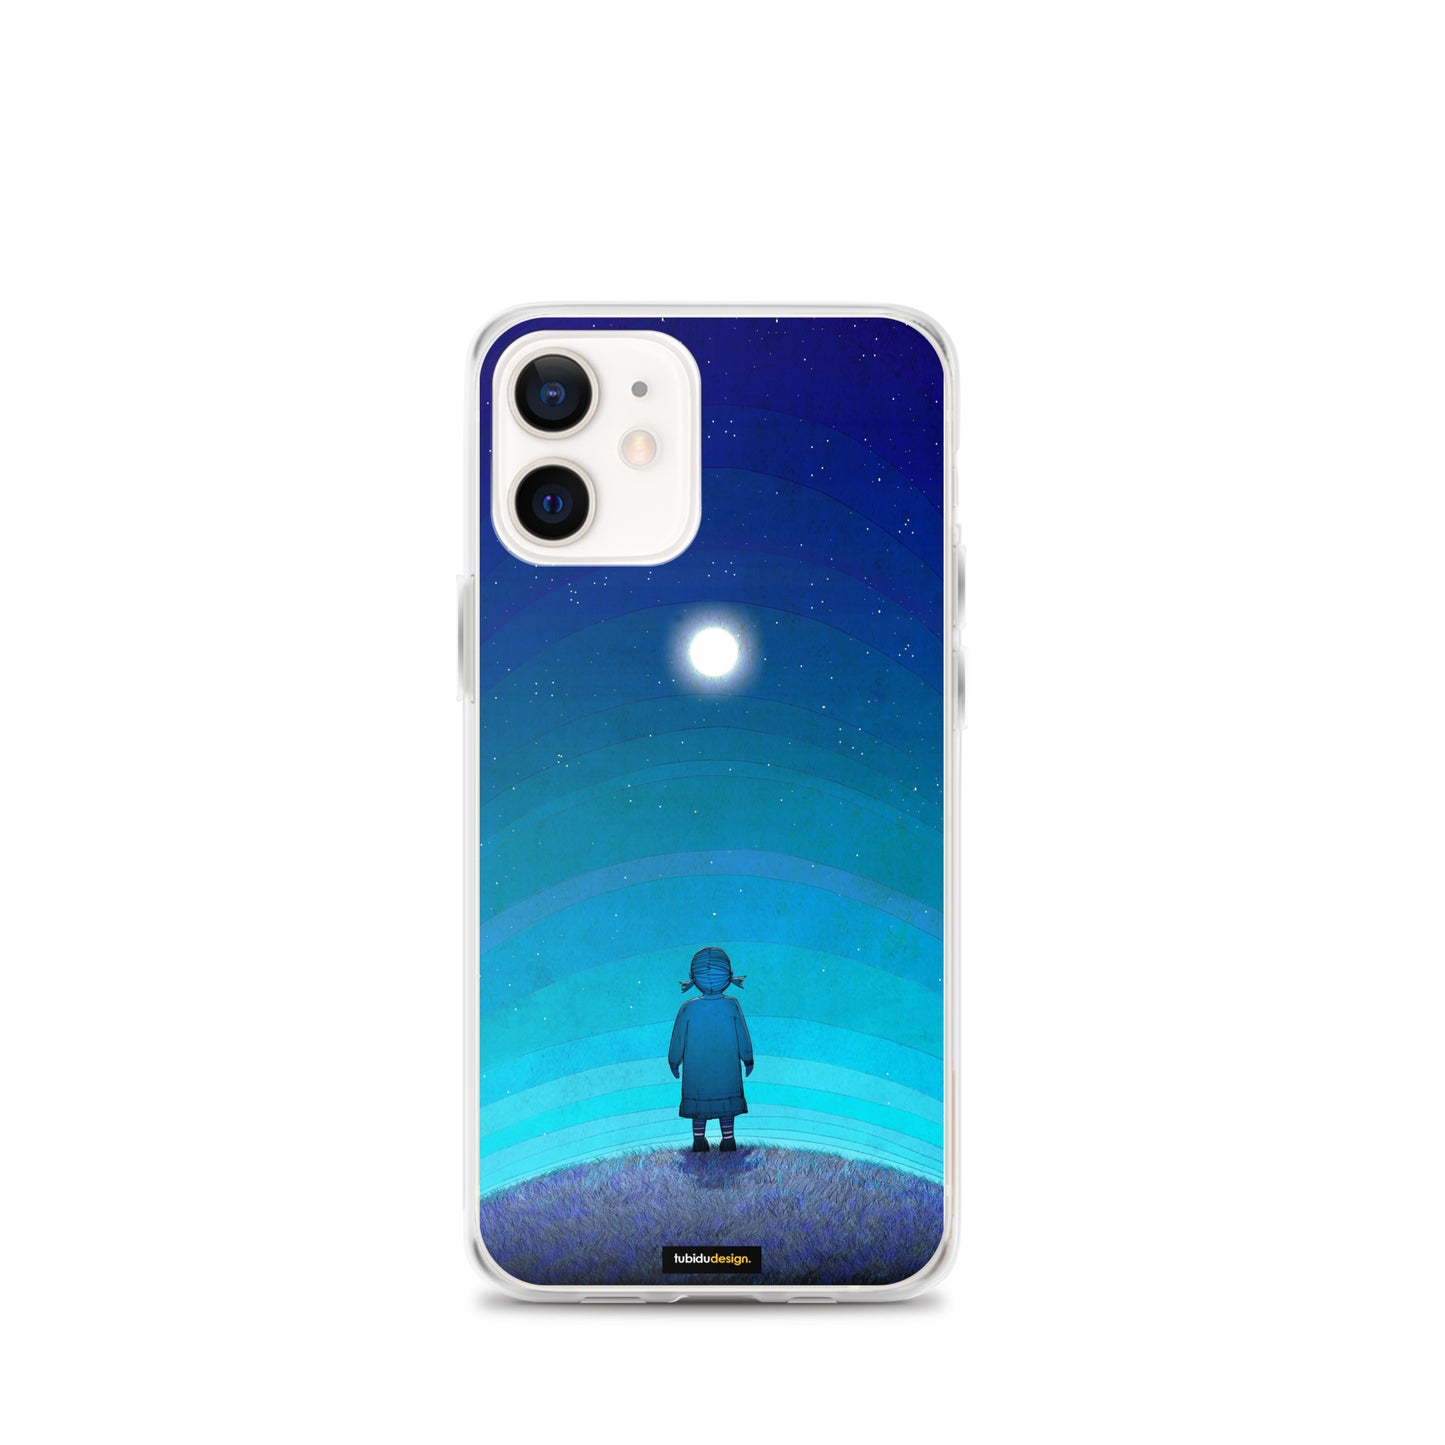 Moonlight - Illustrated iPhone Case